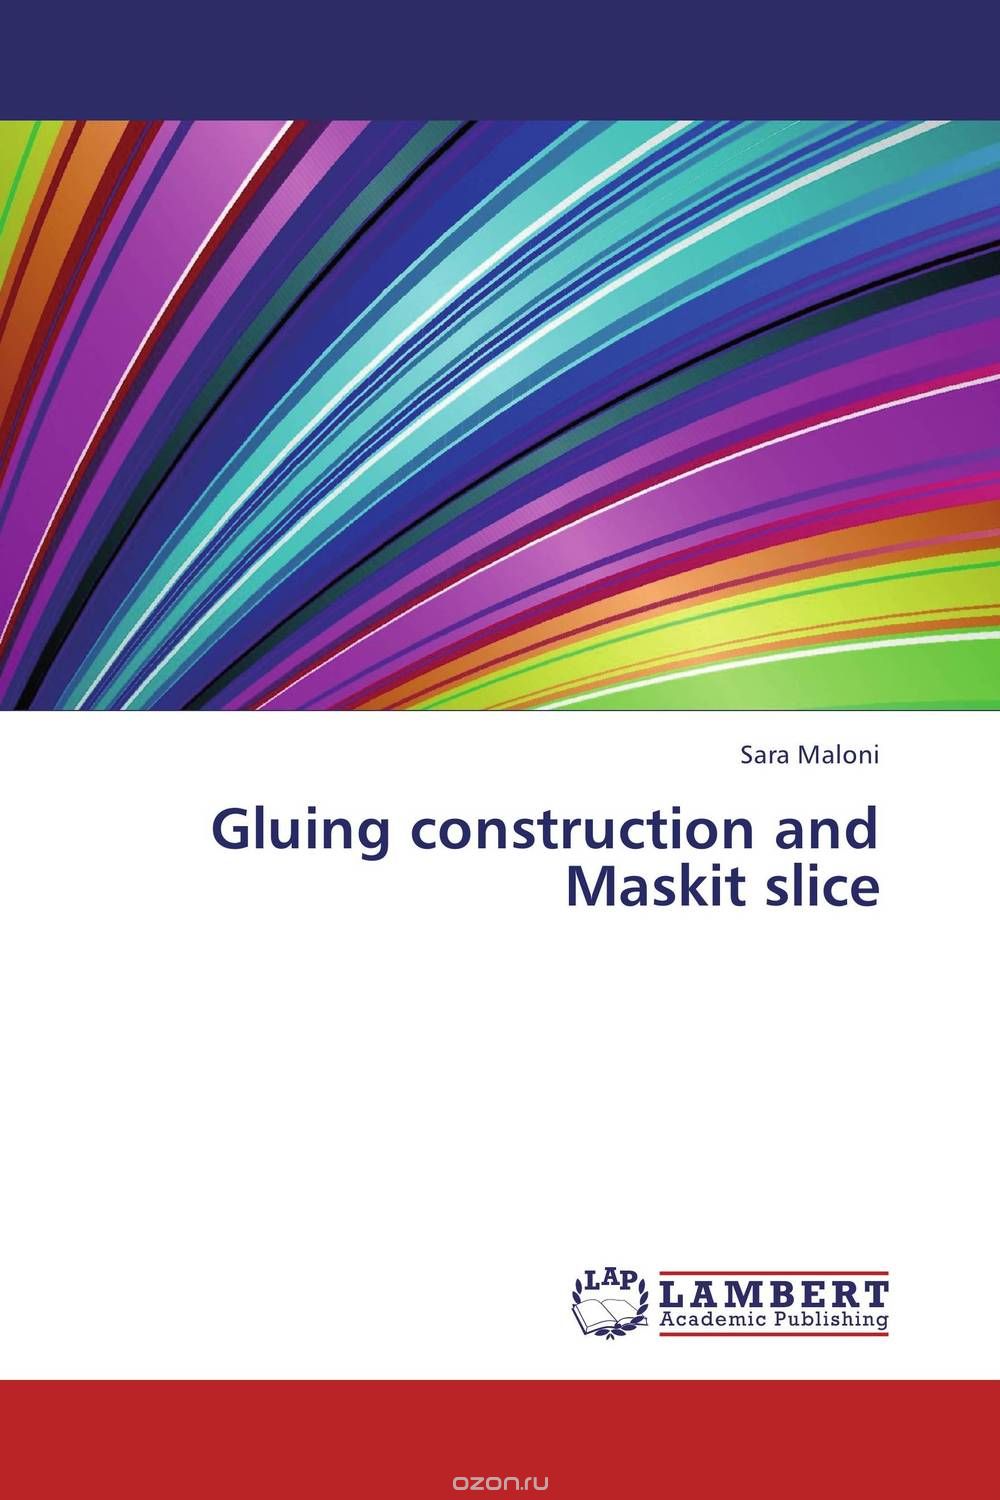 Gluing construction and Maskit slice